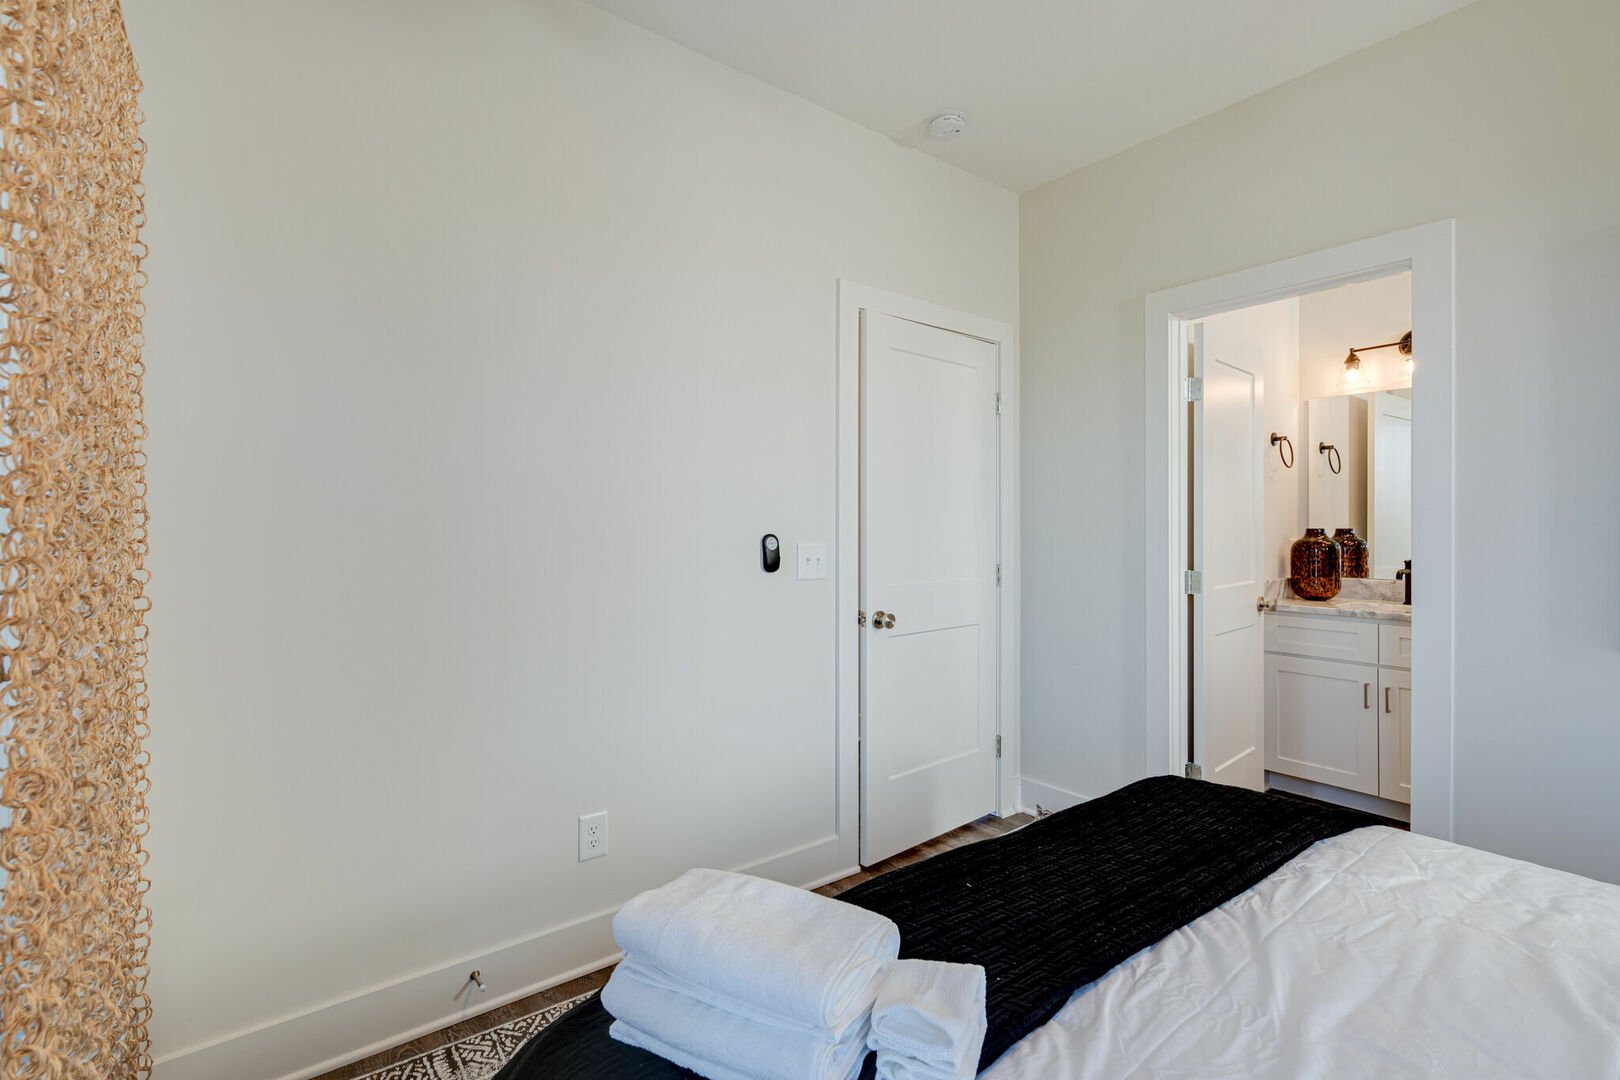 2nd bedroom with king bed with en-suite bathroom